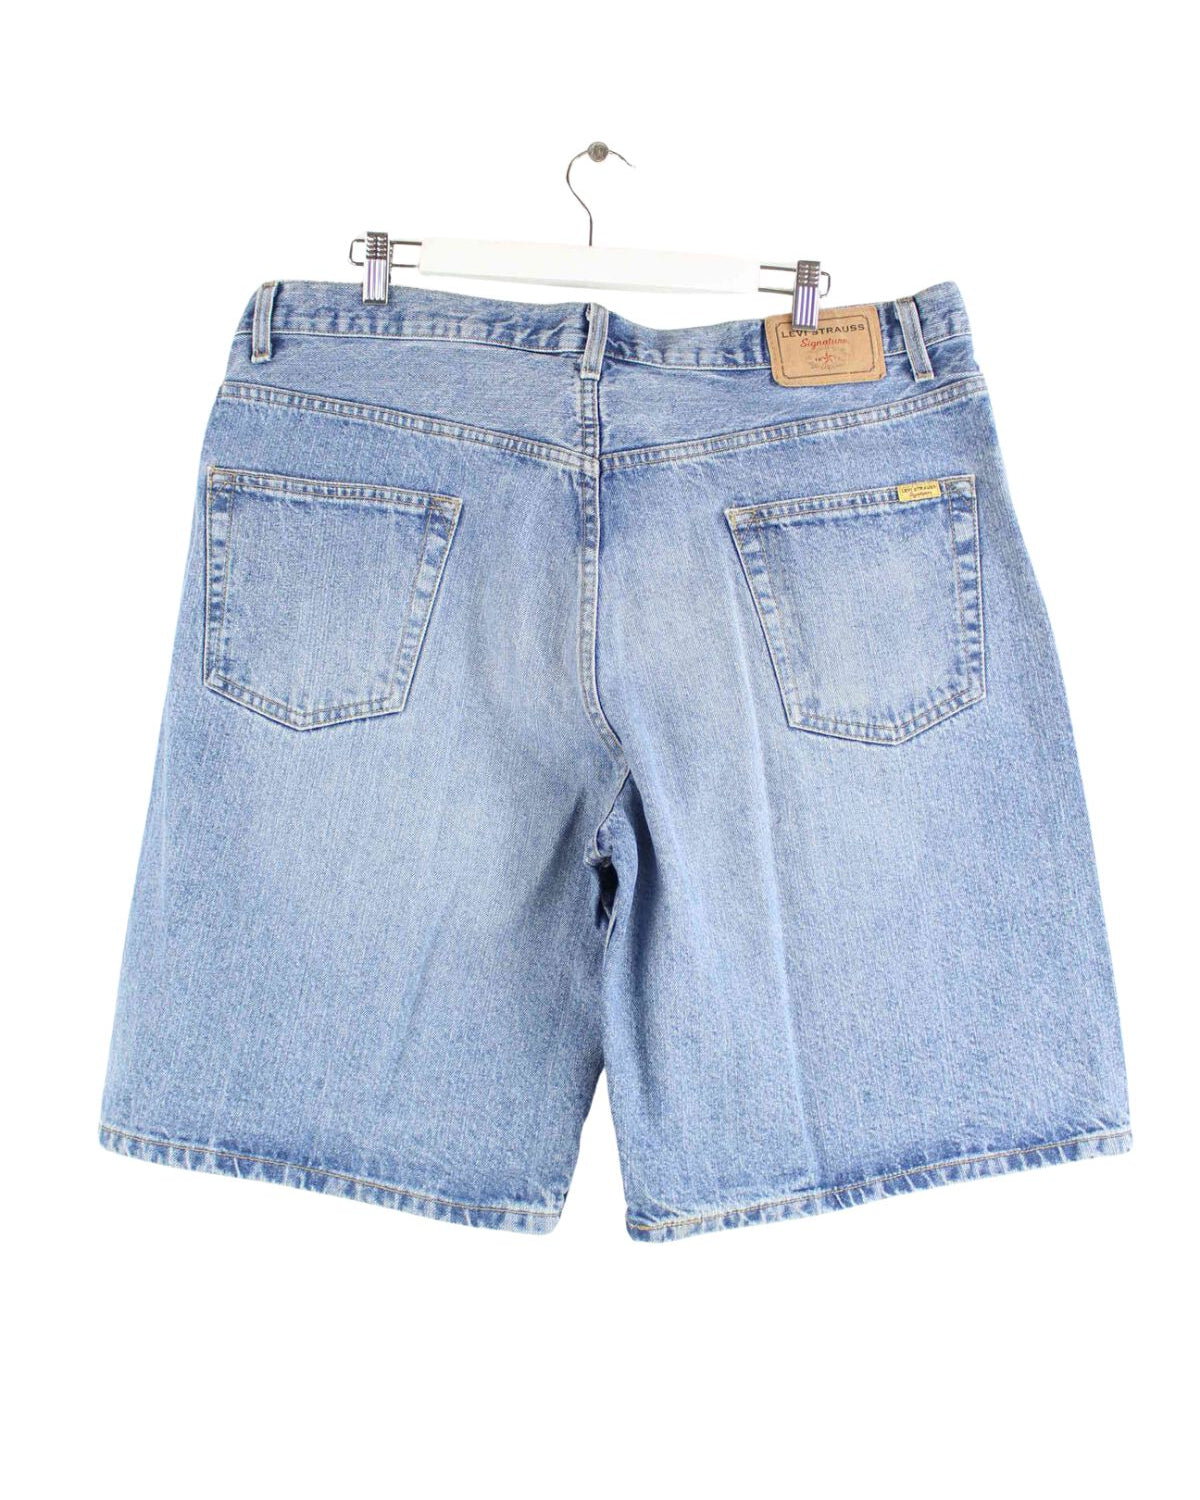 Levi's Signature Jeans Shorts Blau W38 (back image)